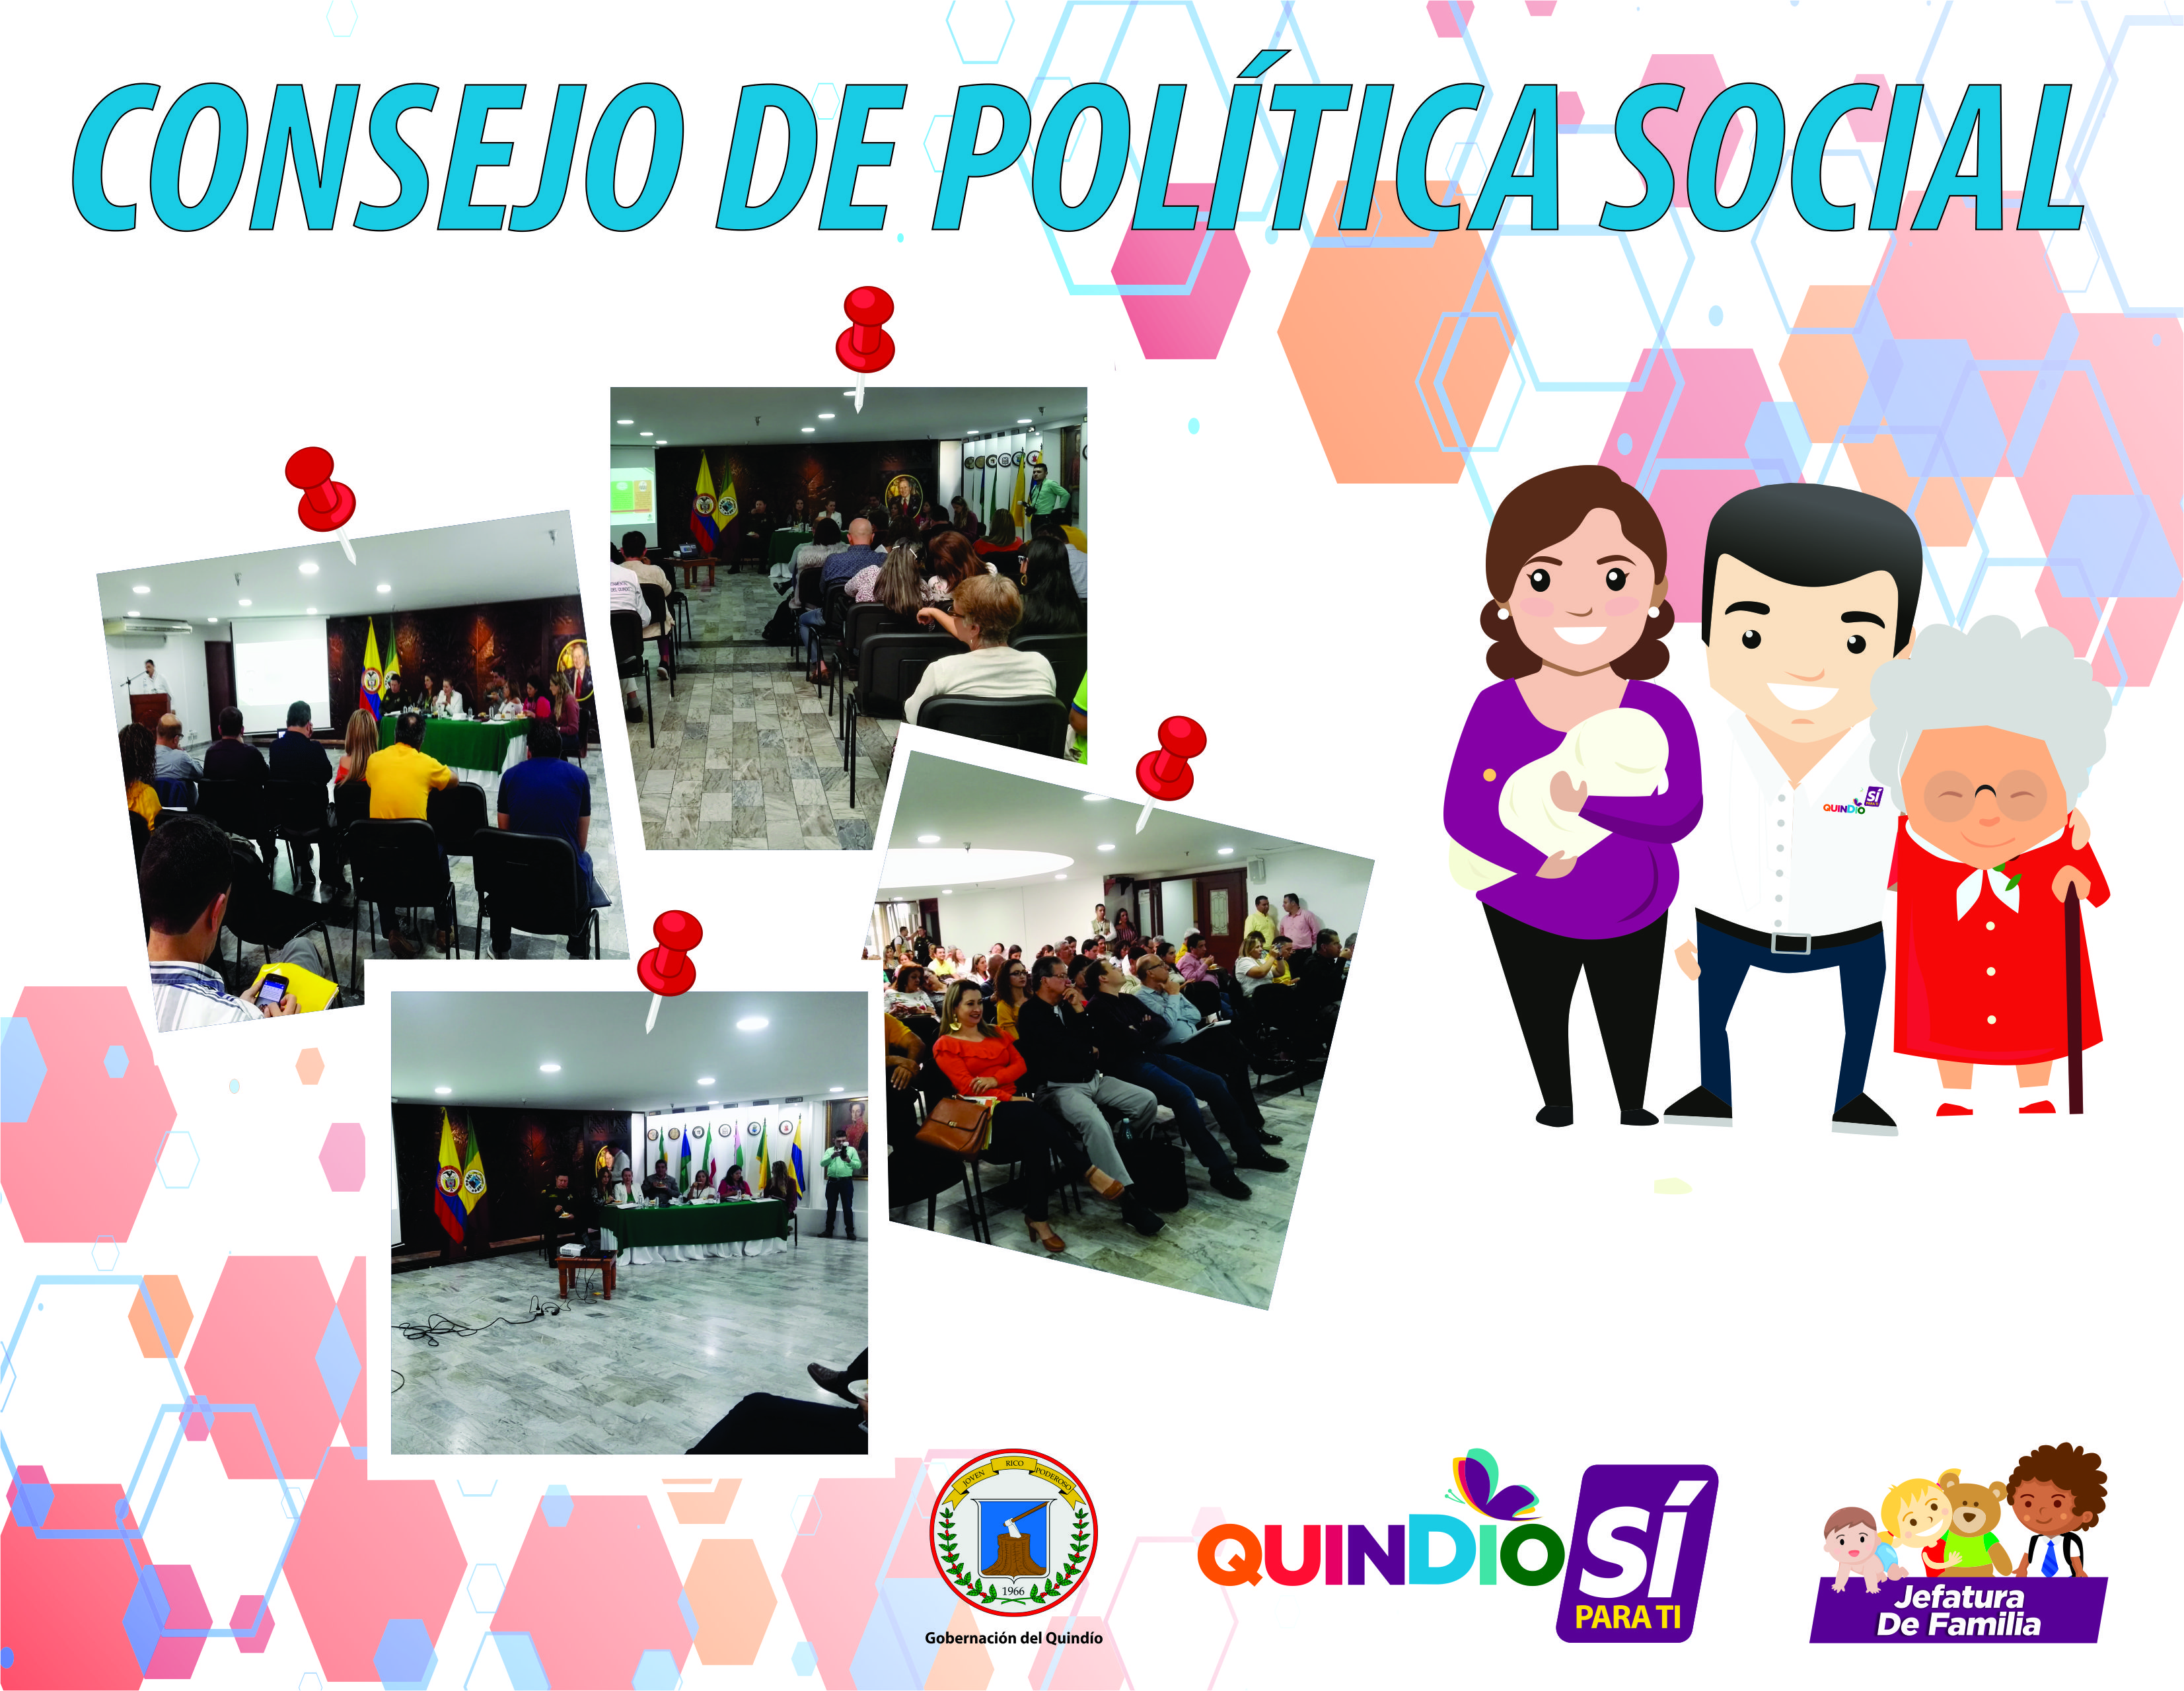 consejo_politica_social_.jpg - 2.54 MB